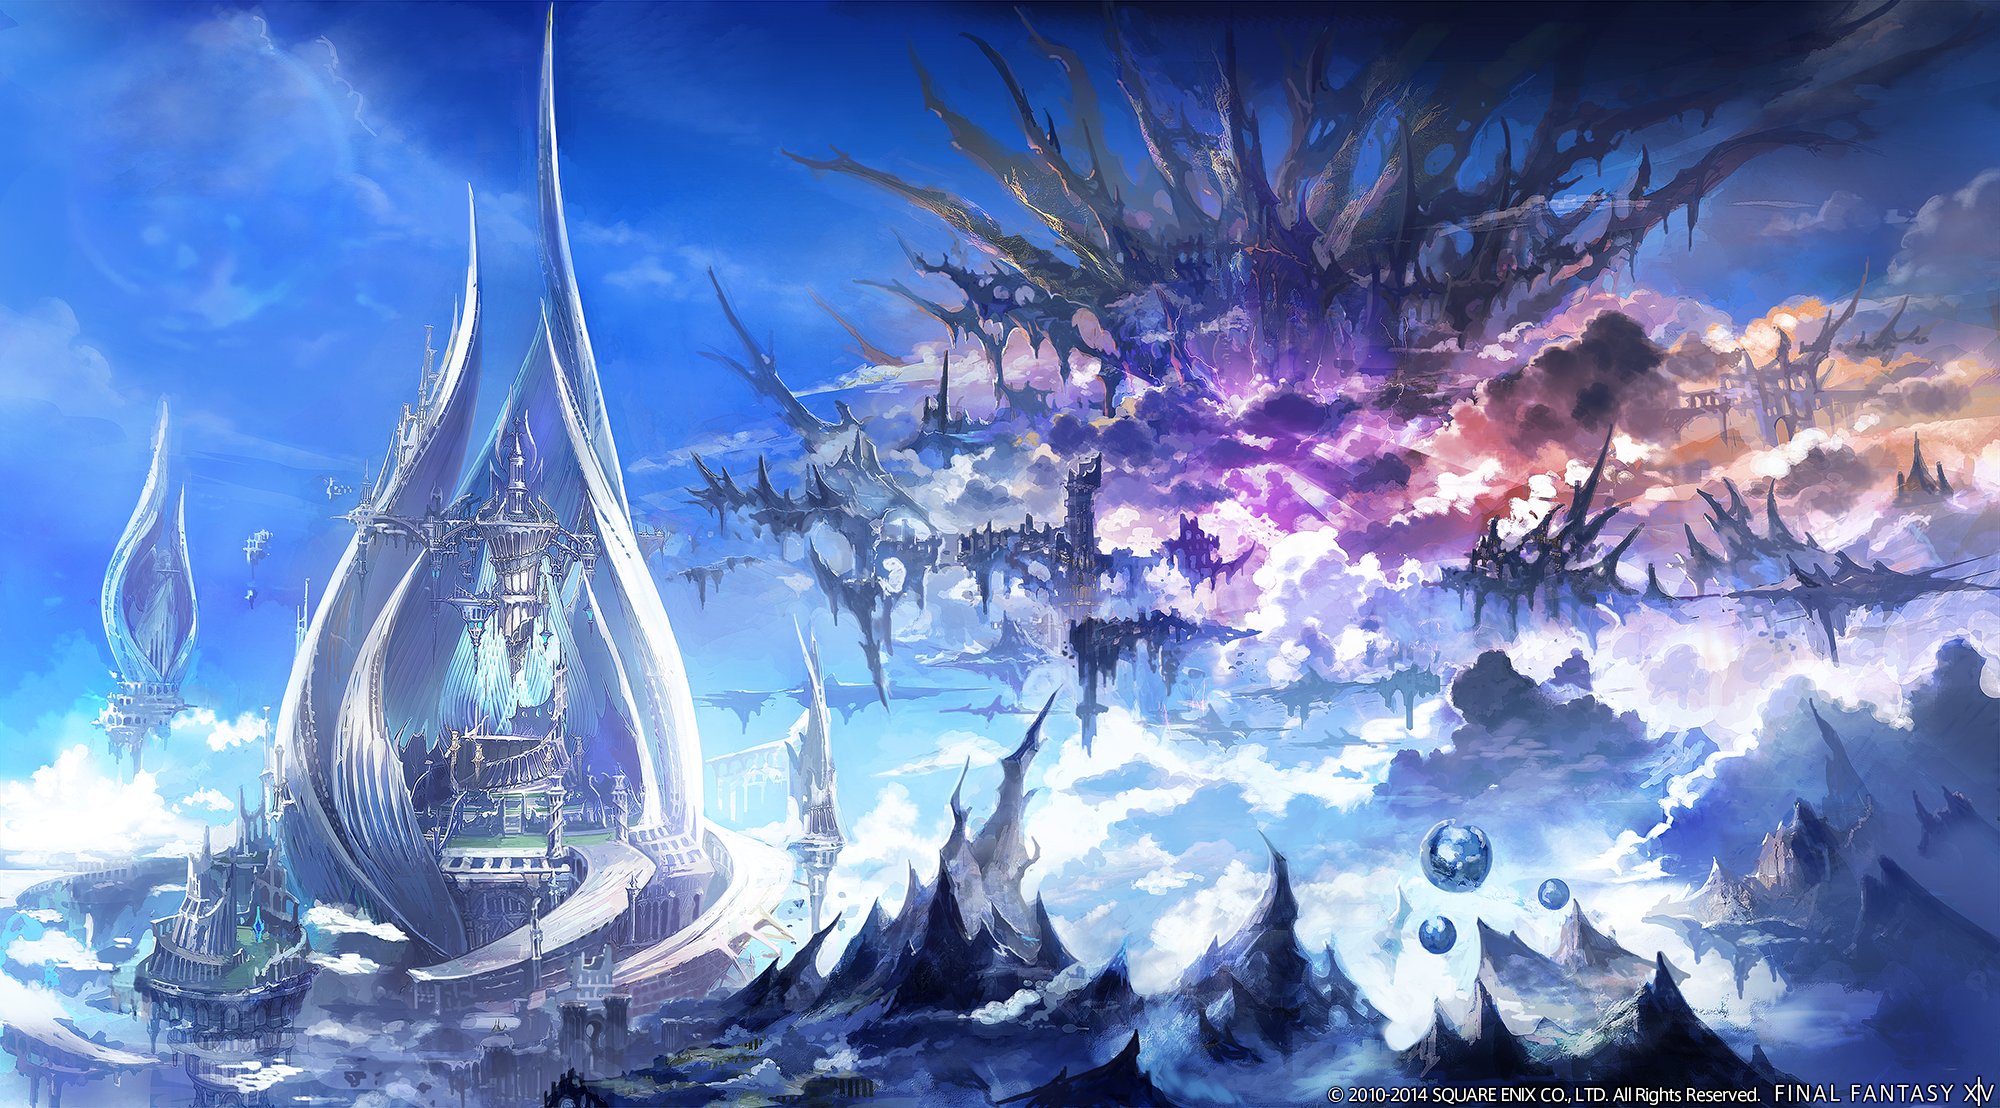 Final Fantasy Xiv A Realm Reborn Fans At Its First European